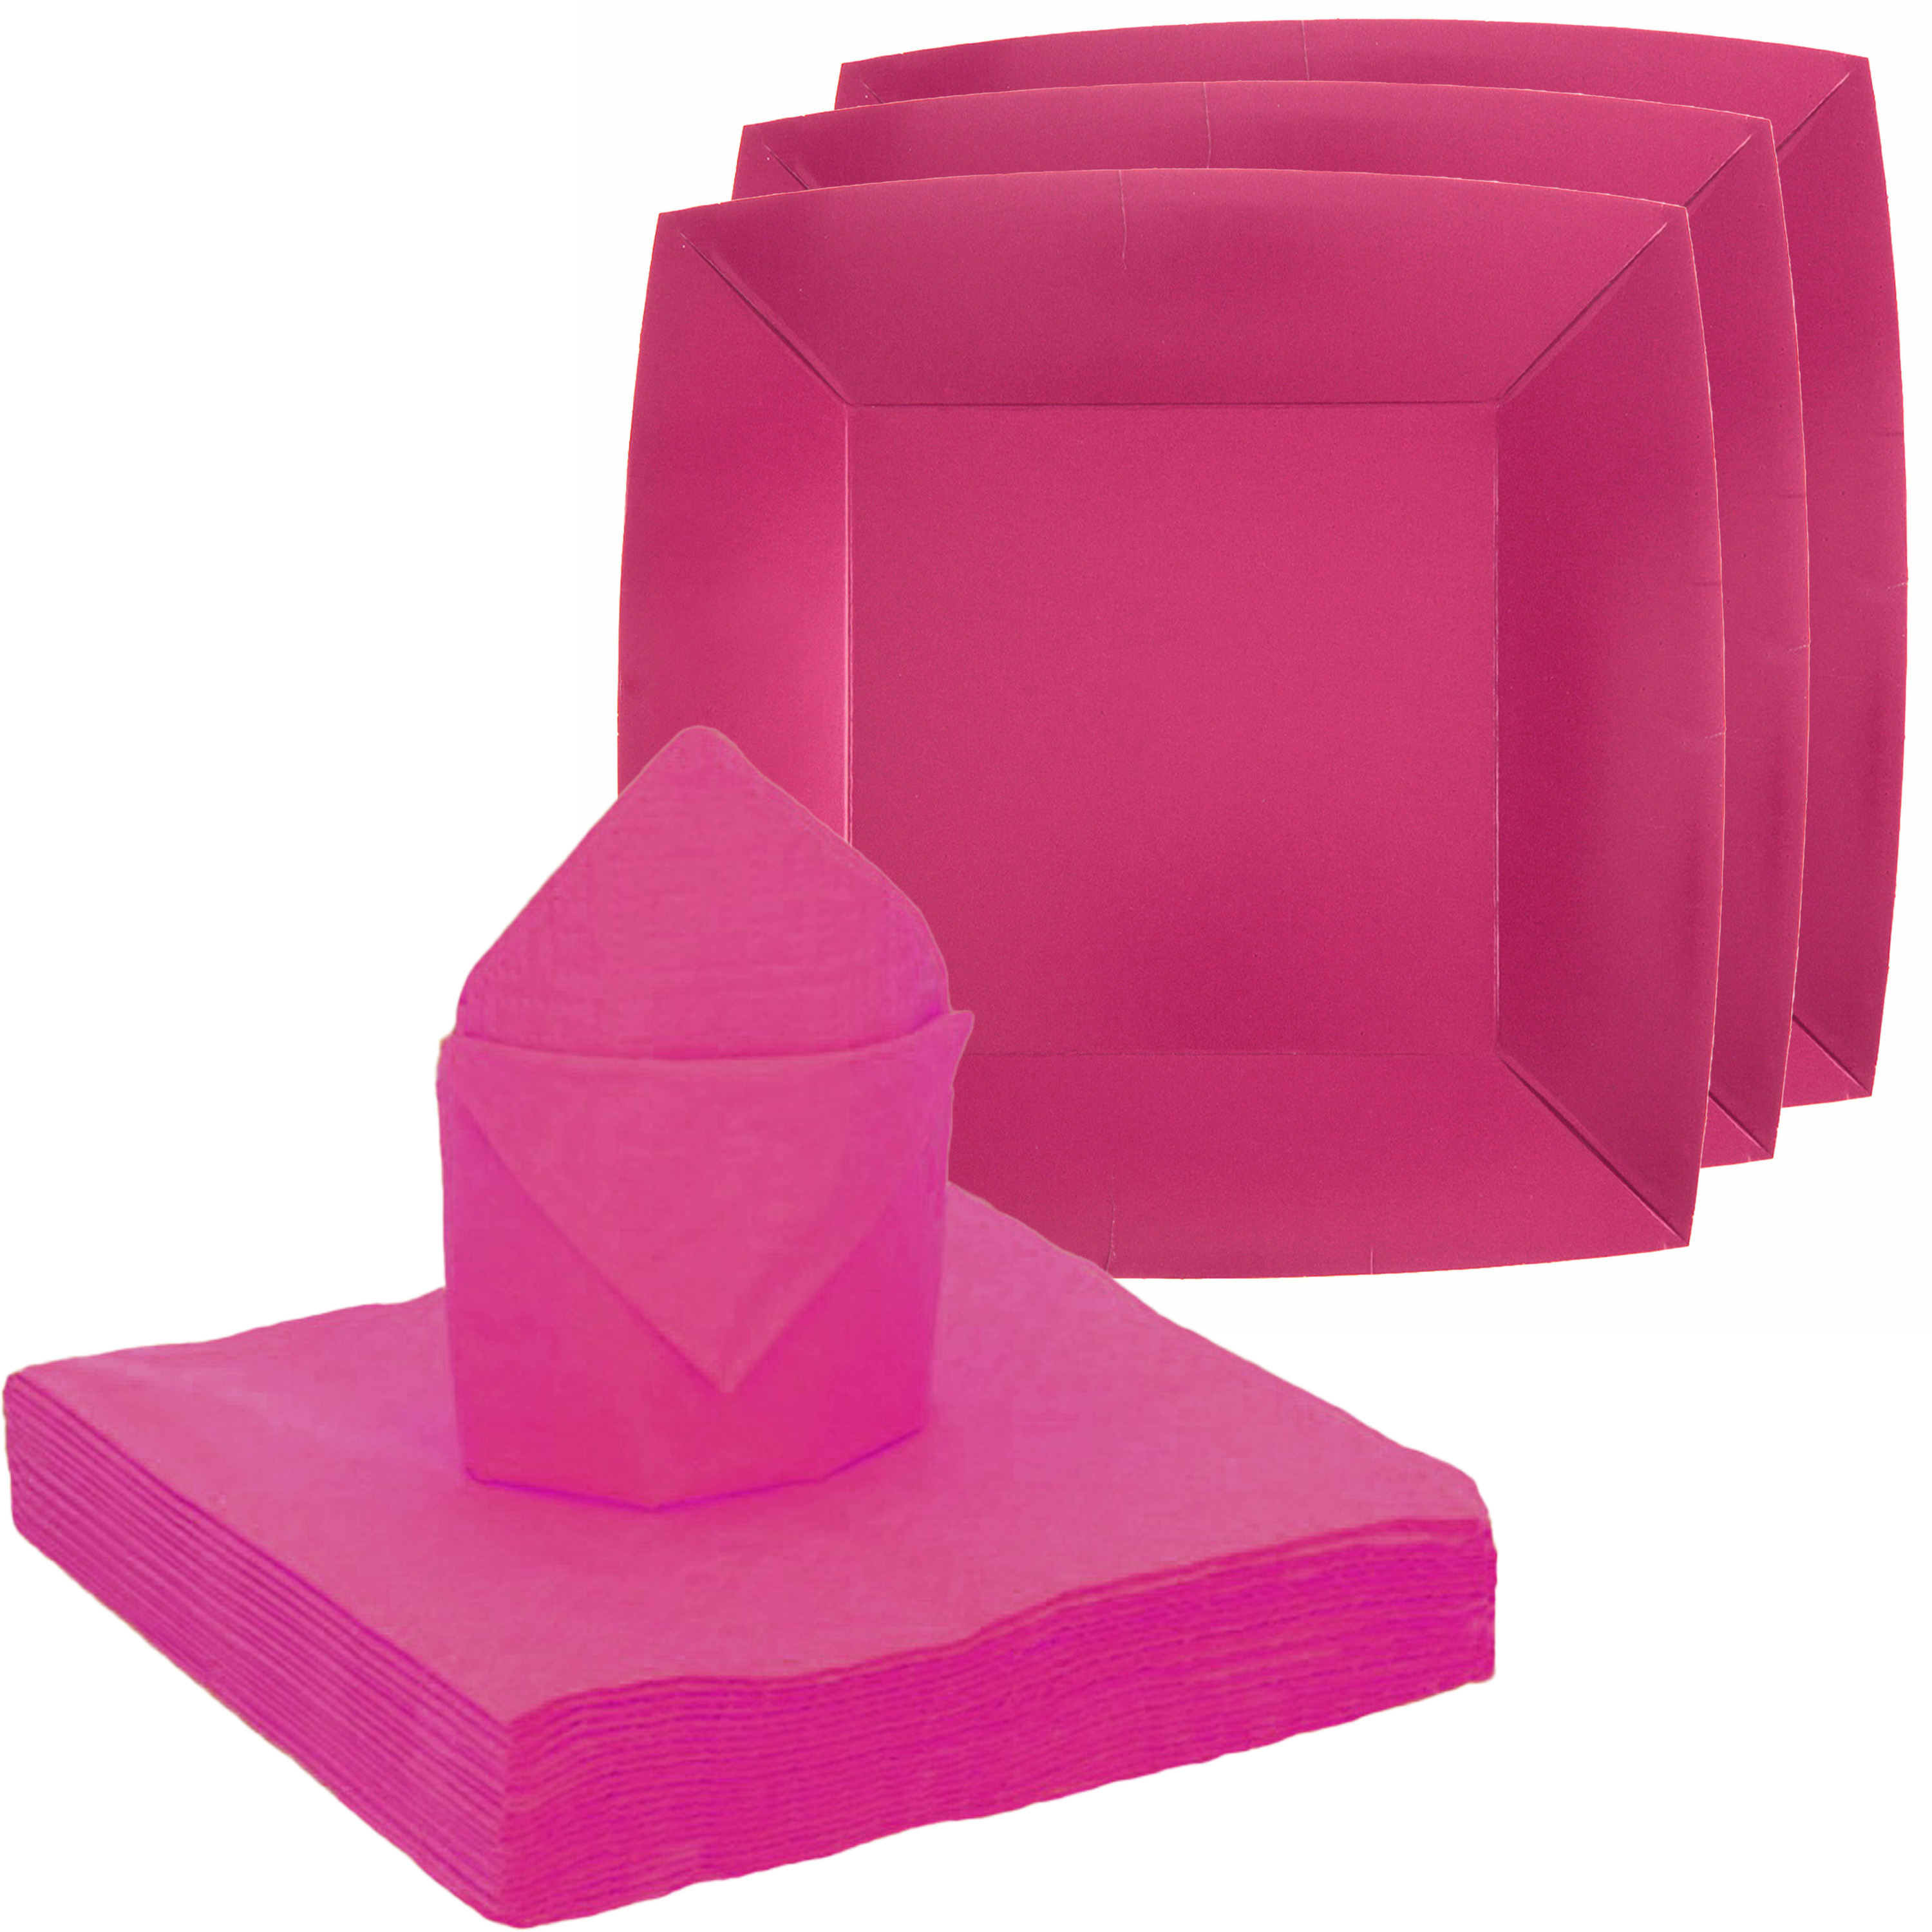 Feest-verjaardag servies set 10x gebaksbordjes-25x servetten fuchsia roze karton